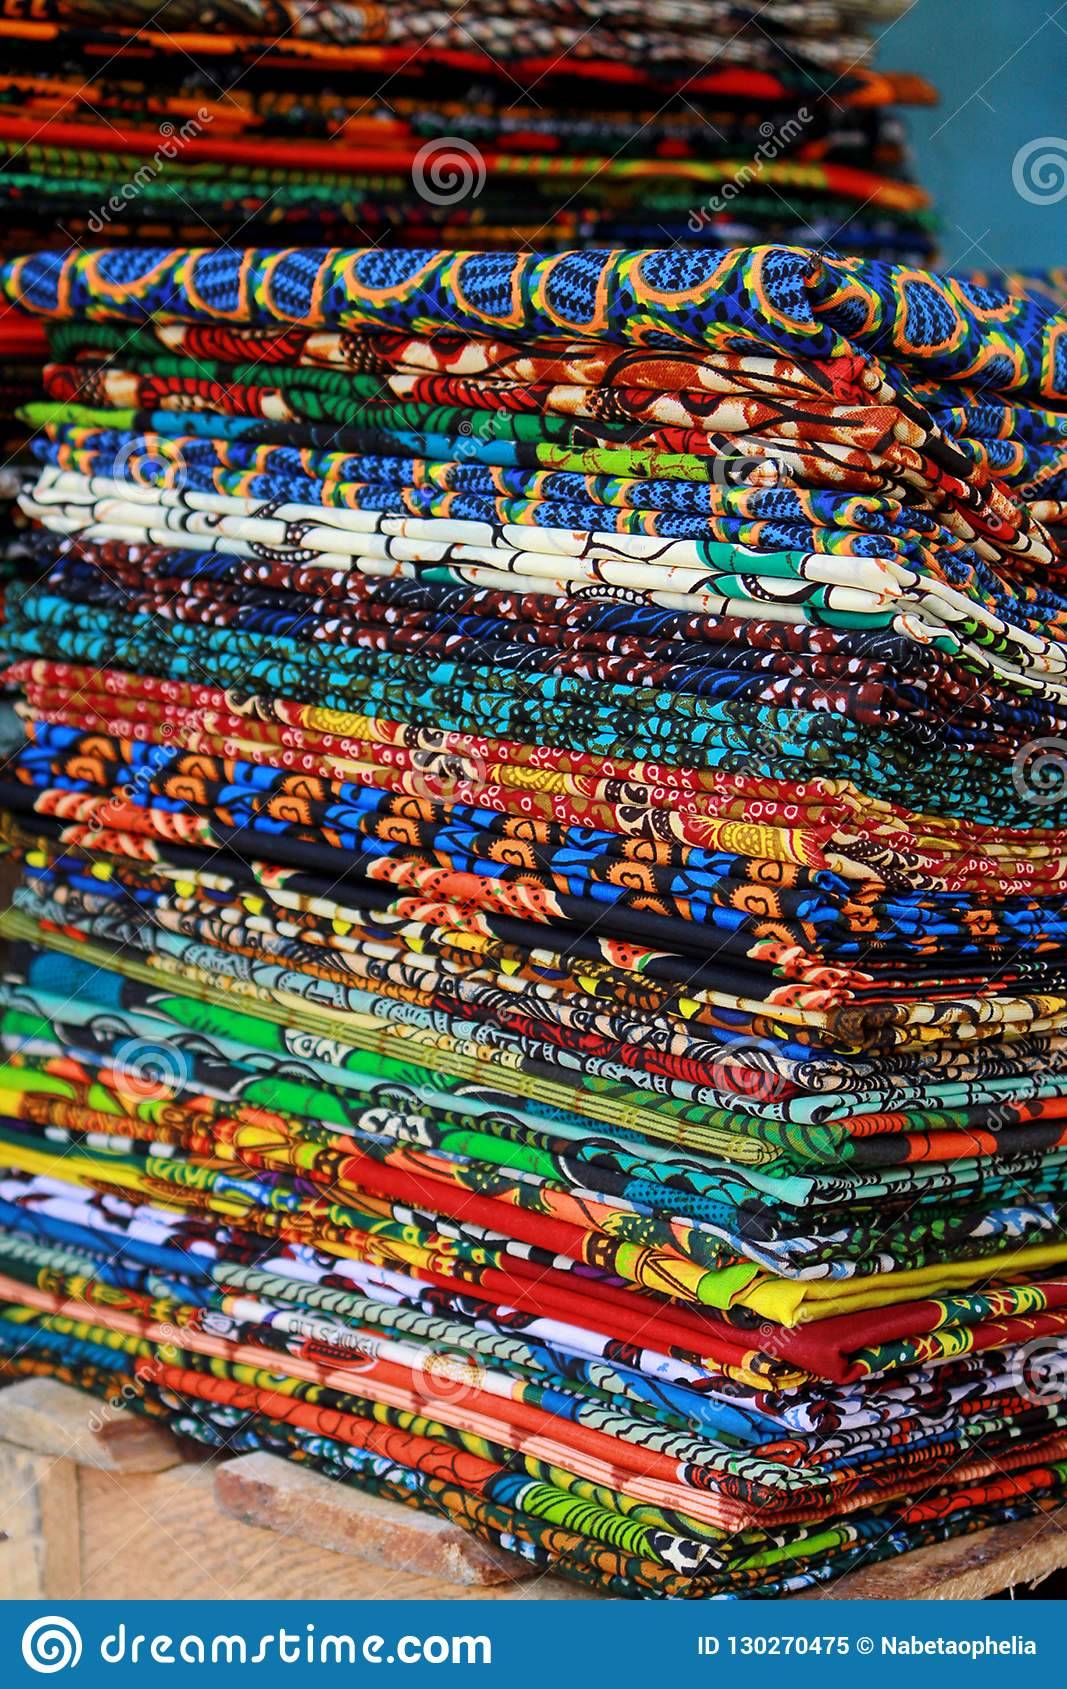 58569kitenge-fabric-makeshift-stall-along-street-accra-ghana-bright-vivid-colors-red-green-yellow-blue-orange-purple-130270475.jpg